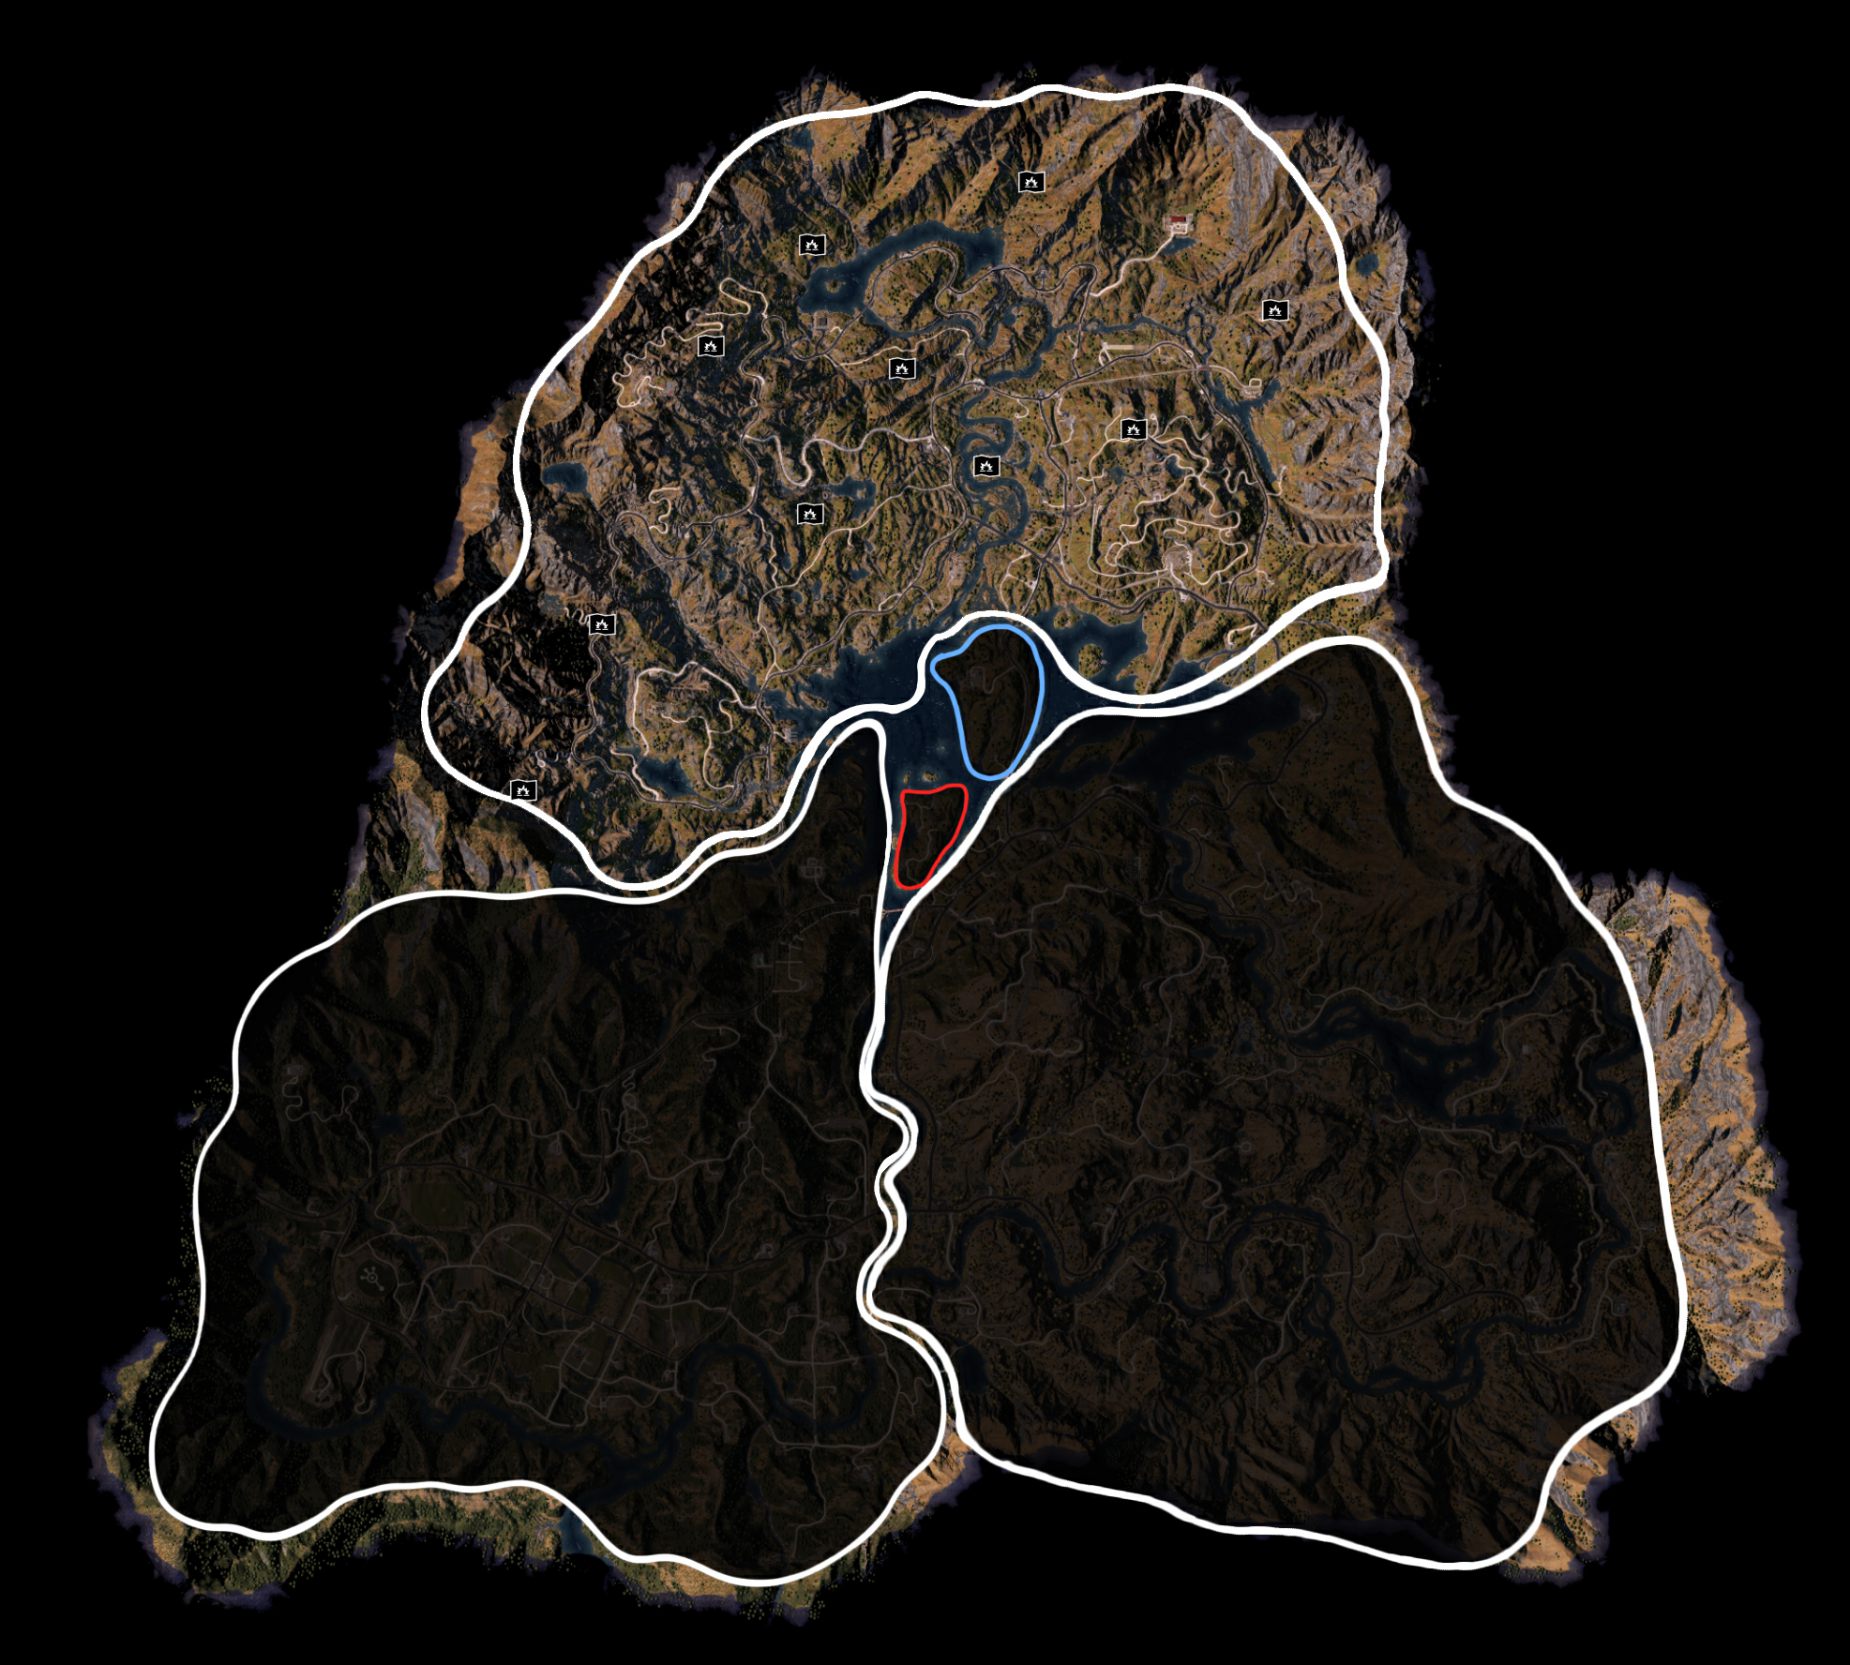 Wolf beacon locations